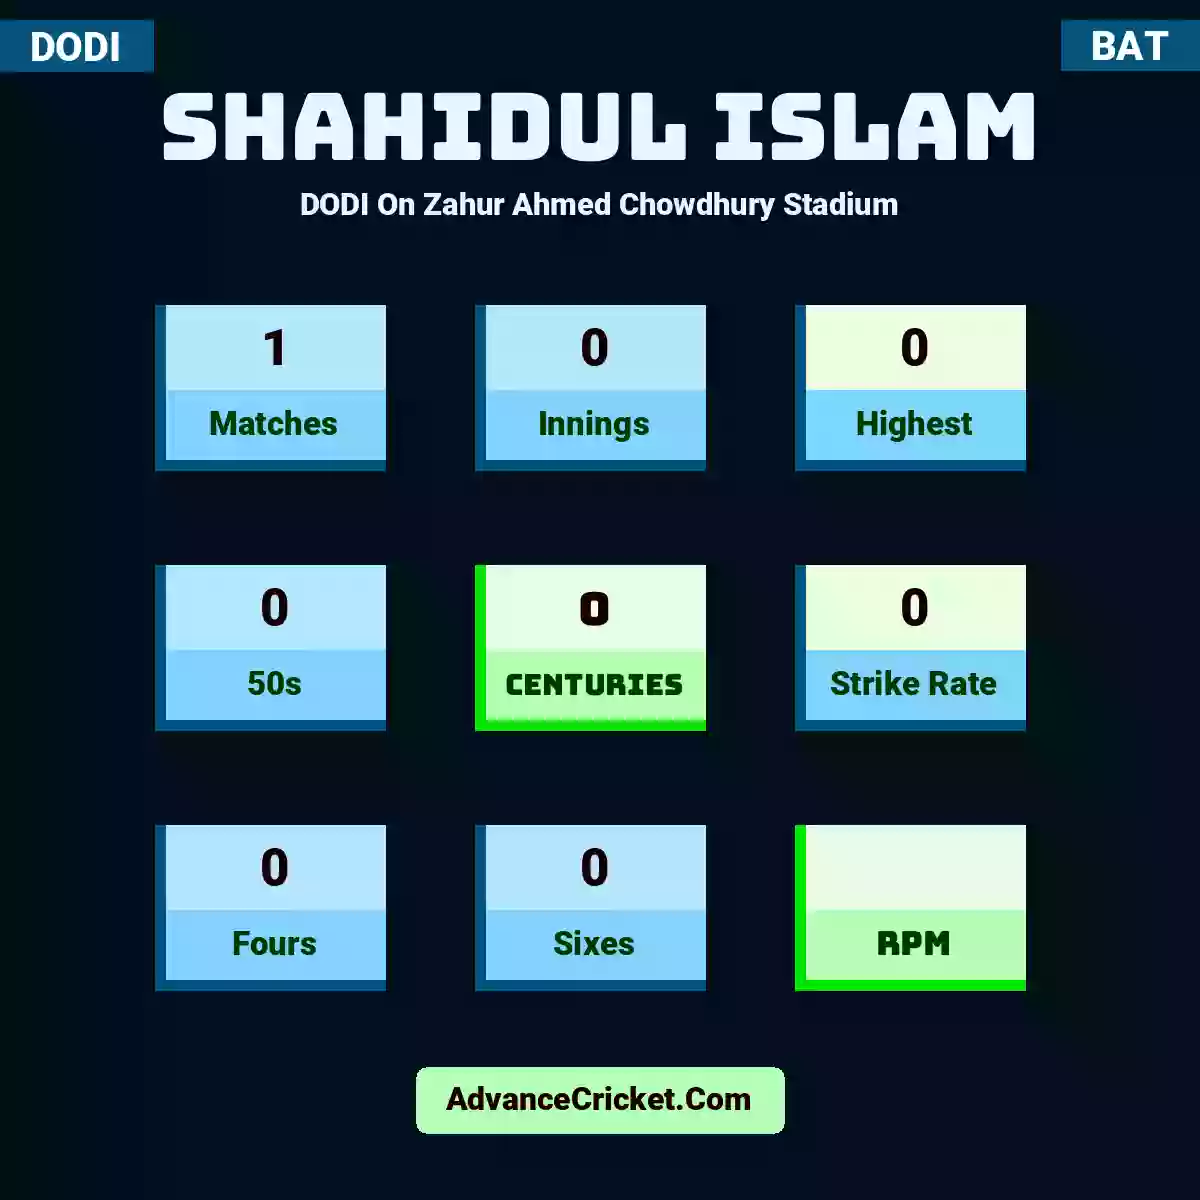 Shahidul Islam DODI  On Zahur Ahmed Chowdhury Stadium, Shahidul Islam played 1 matches, scored 0 runs as highest, 0 half-centuries, and 0 centuries, with a strike rate of 0. S.Islam hit 0 fours and 0 sixes.